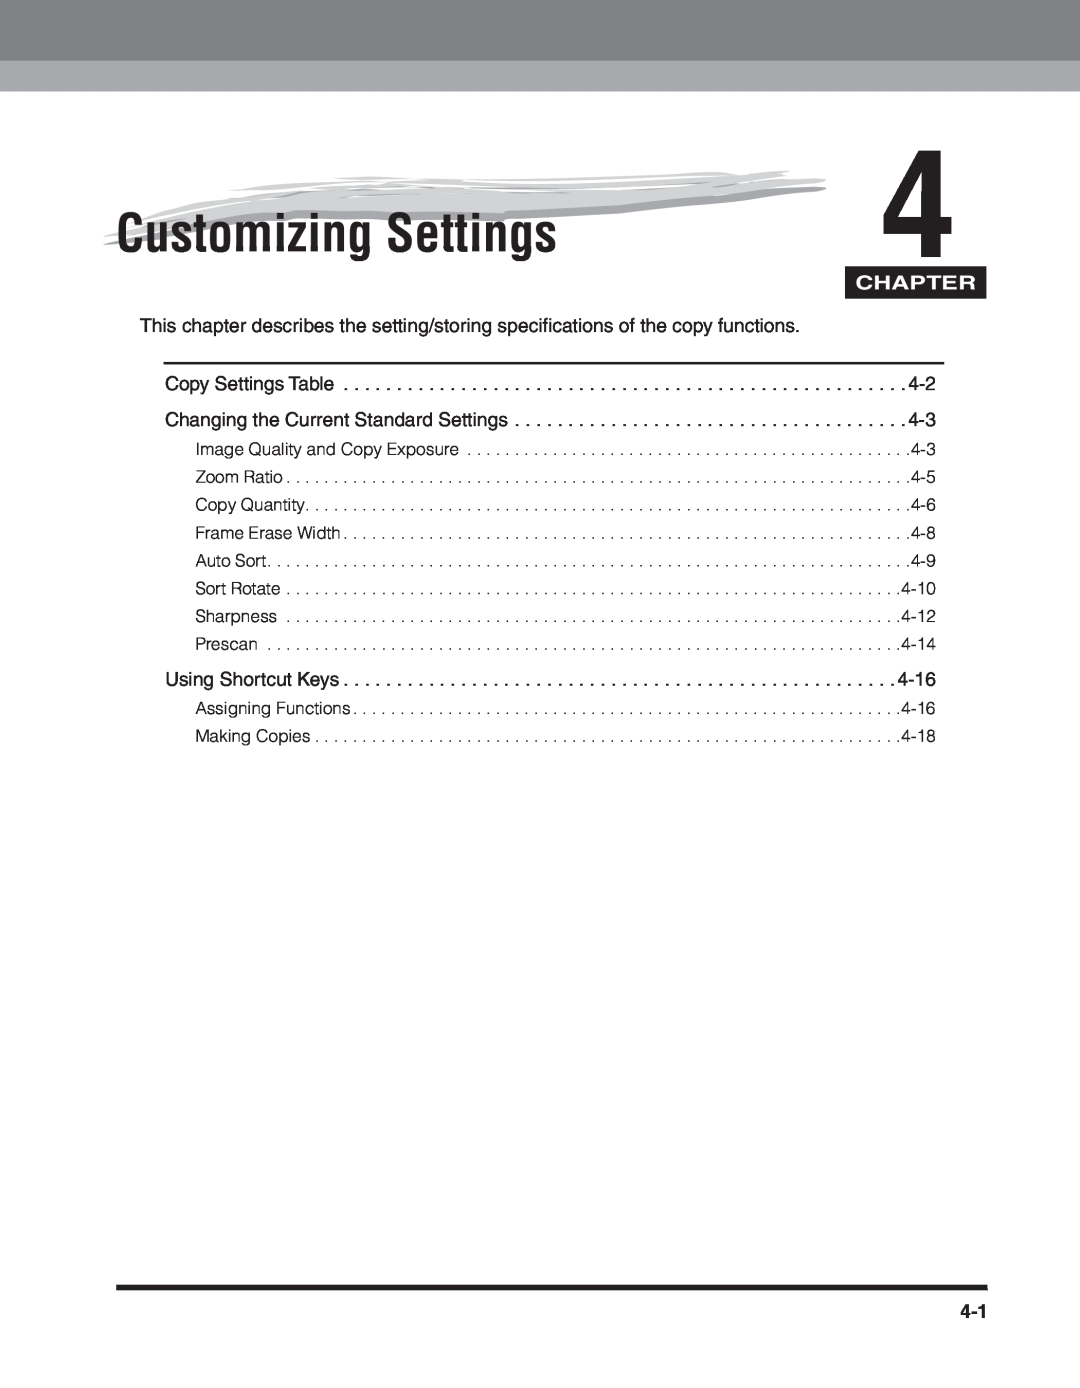 Canon 2300 manual Customizing Settings, Chapter 